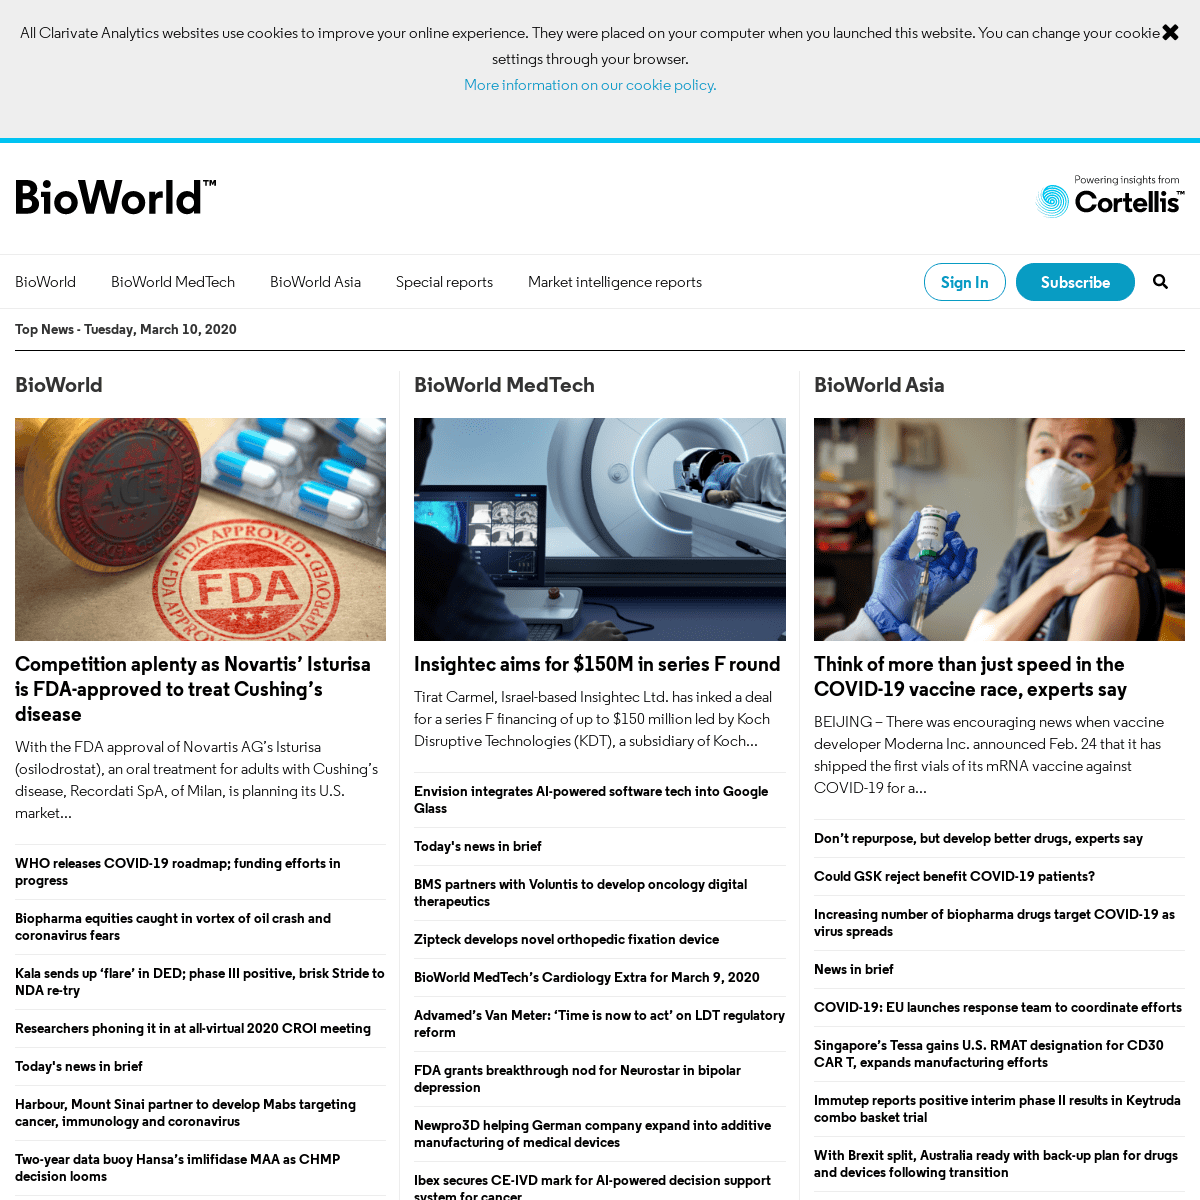 A complete backup of bioworld.com